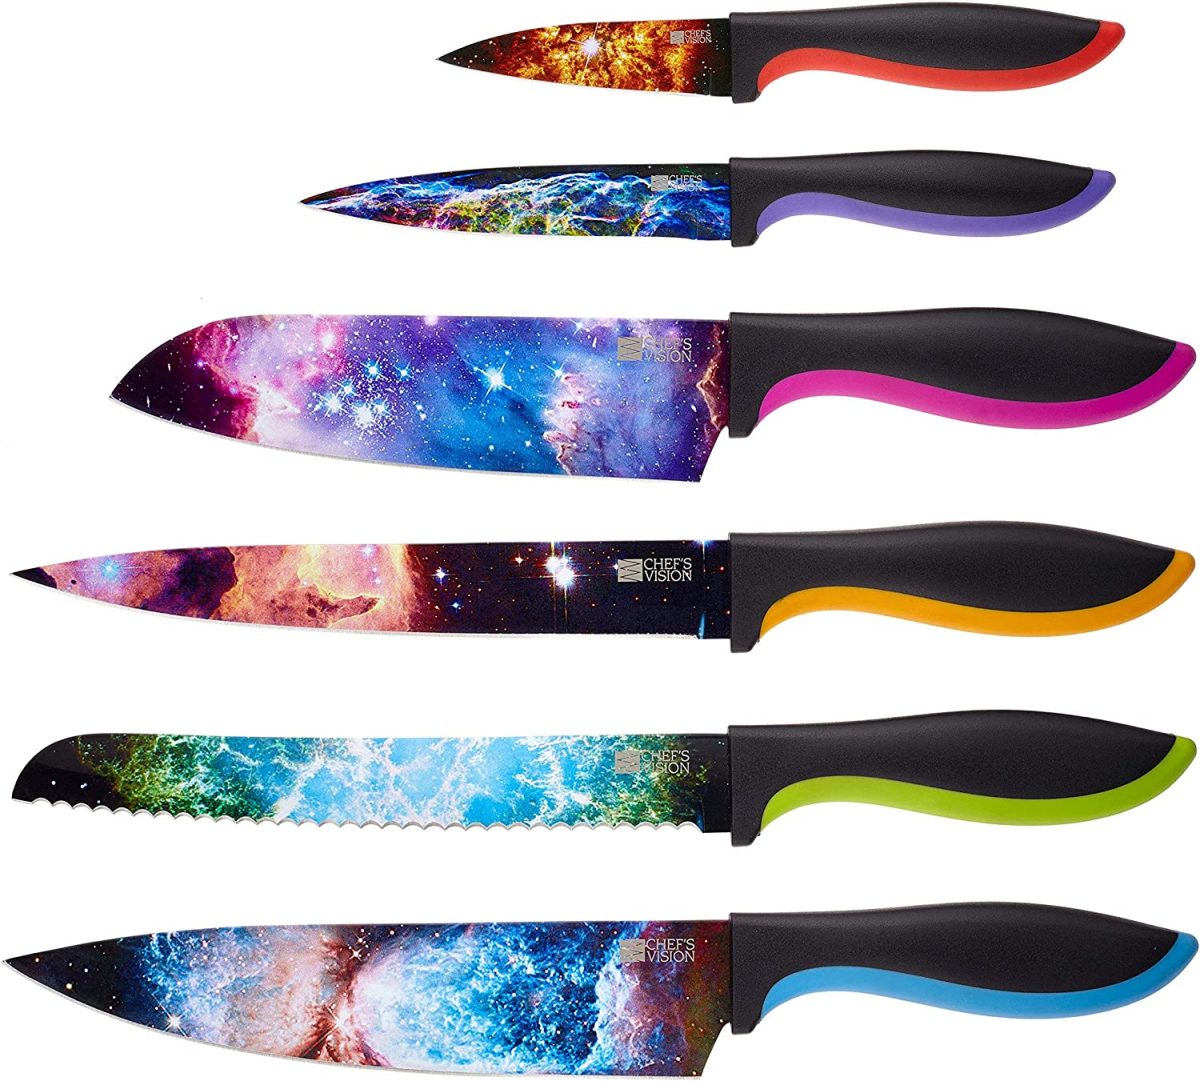 Galaxy Knife Set